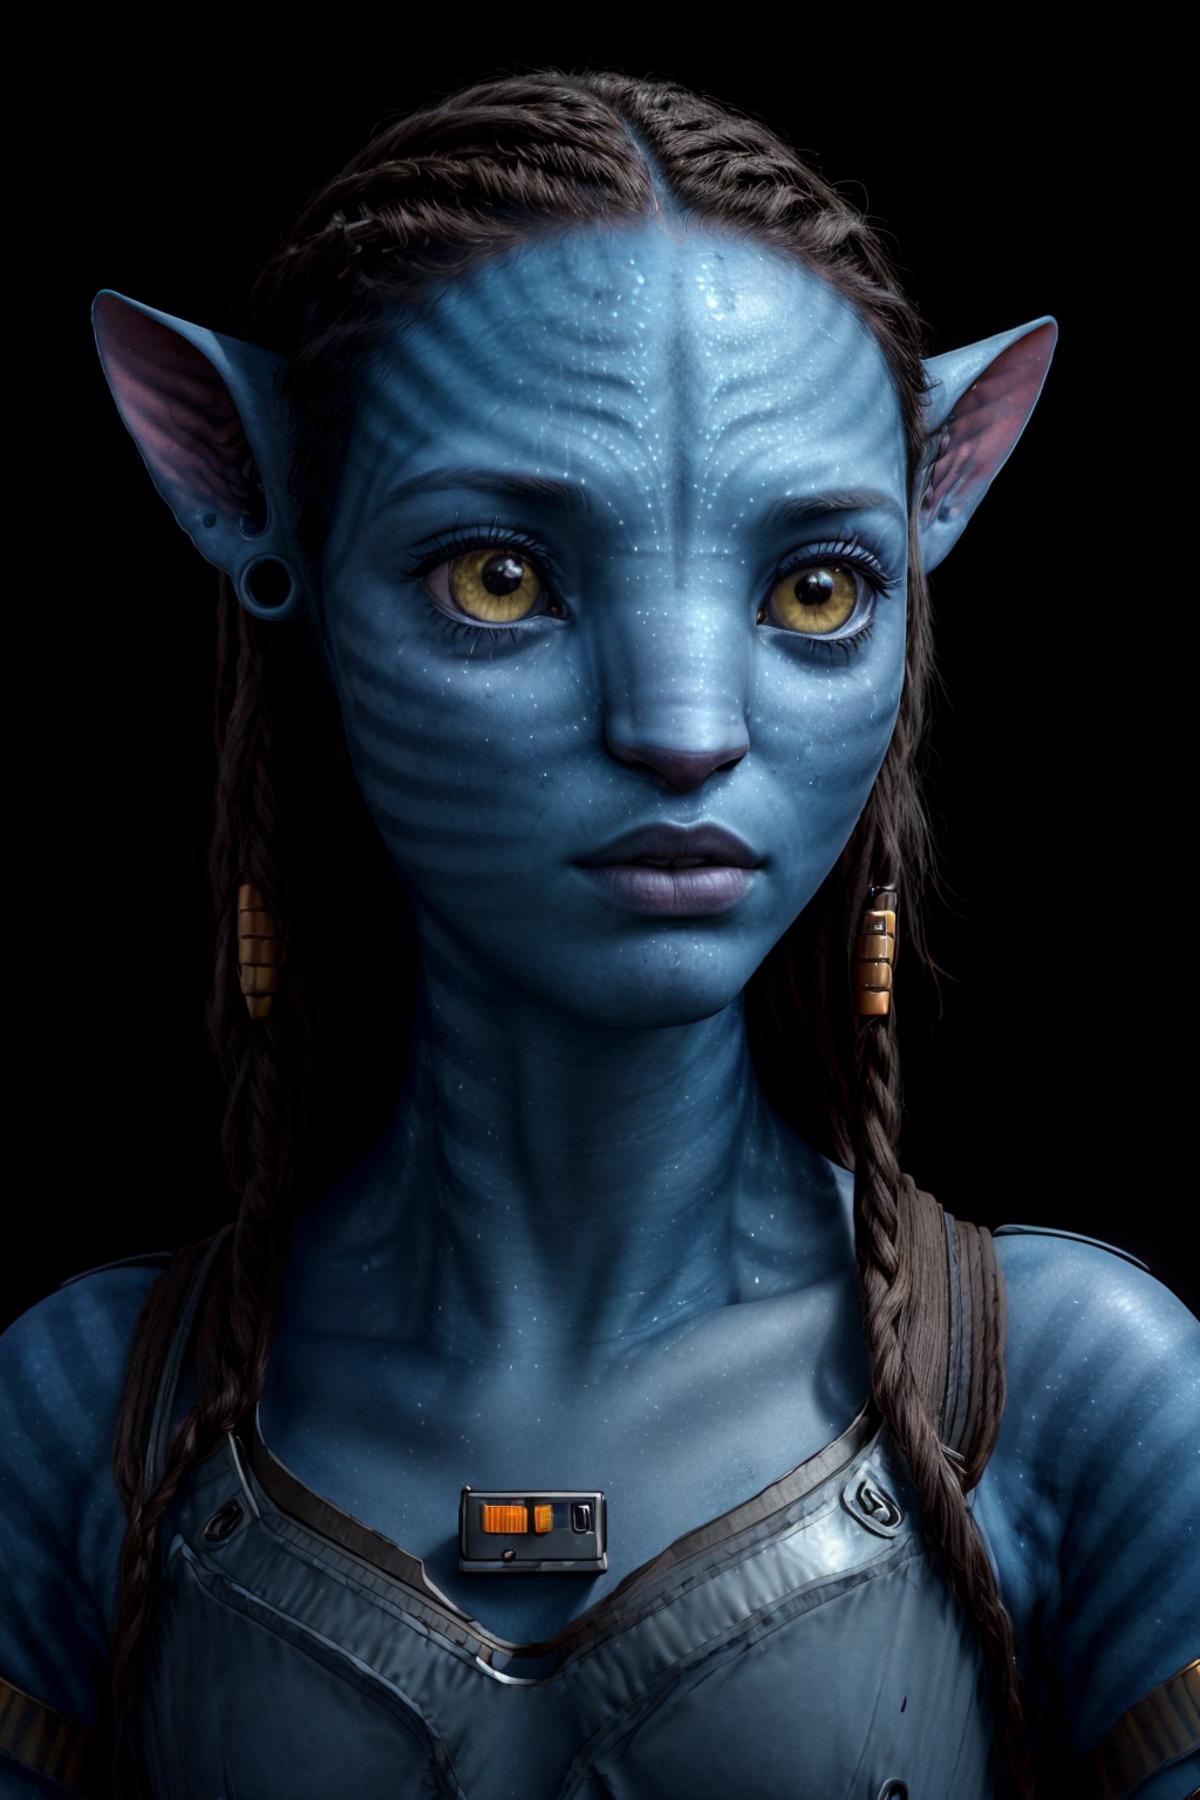 Neytiri te Tskaha Mo'at'ite / Na'vi girl / Avatar alien girl image by AIdollagency